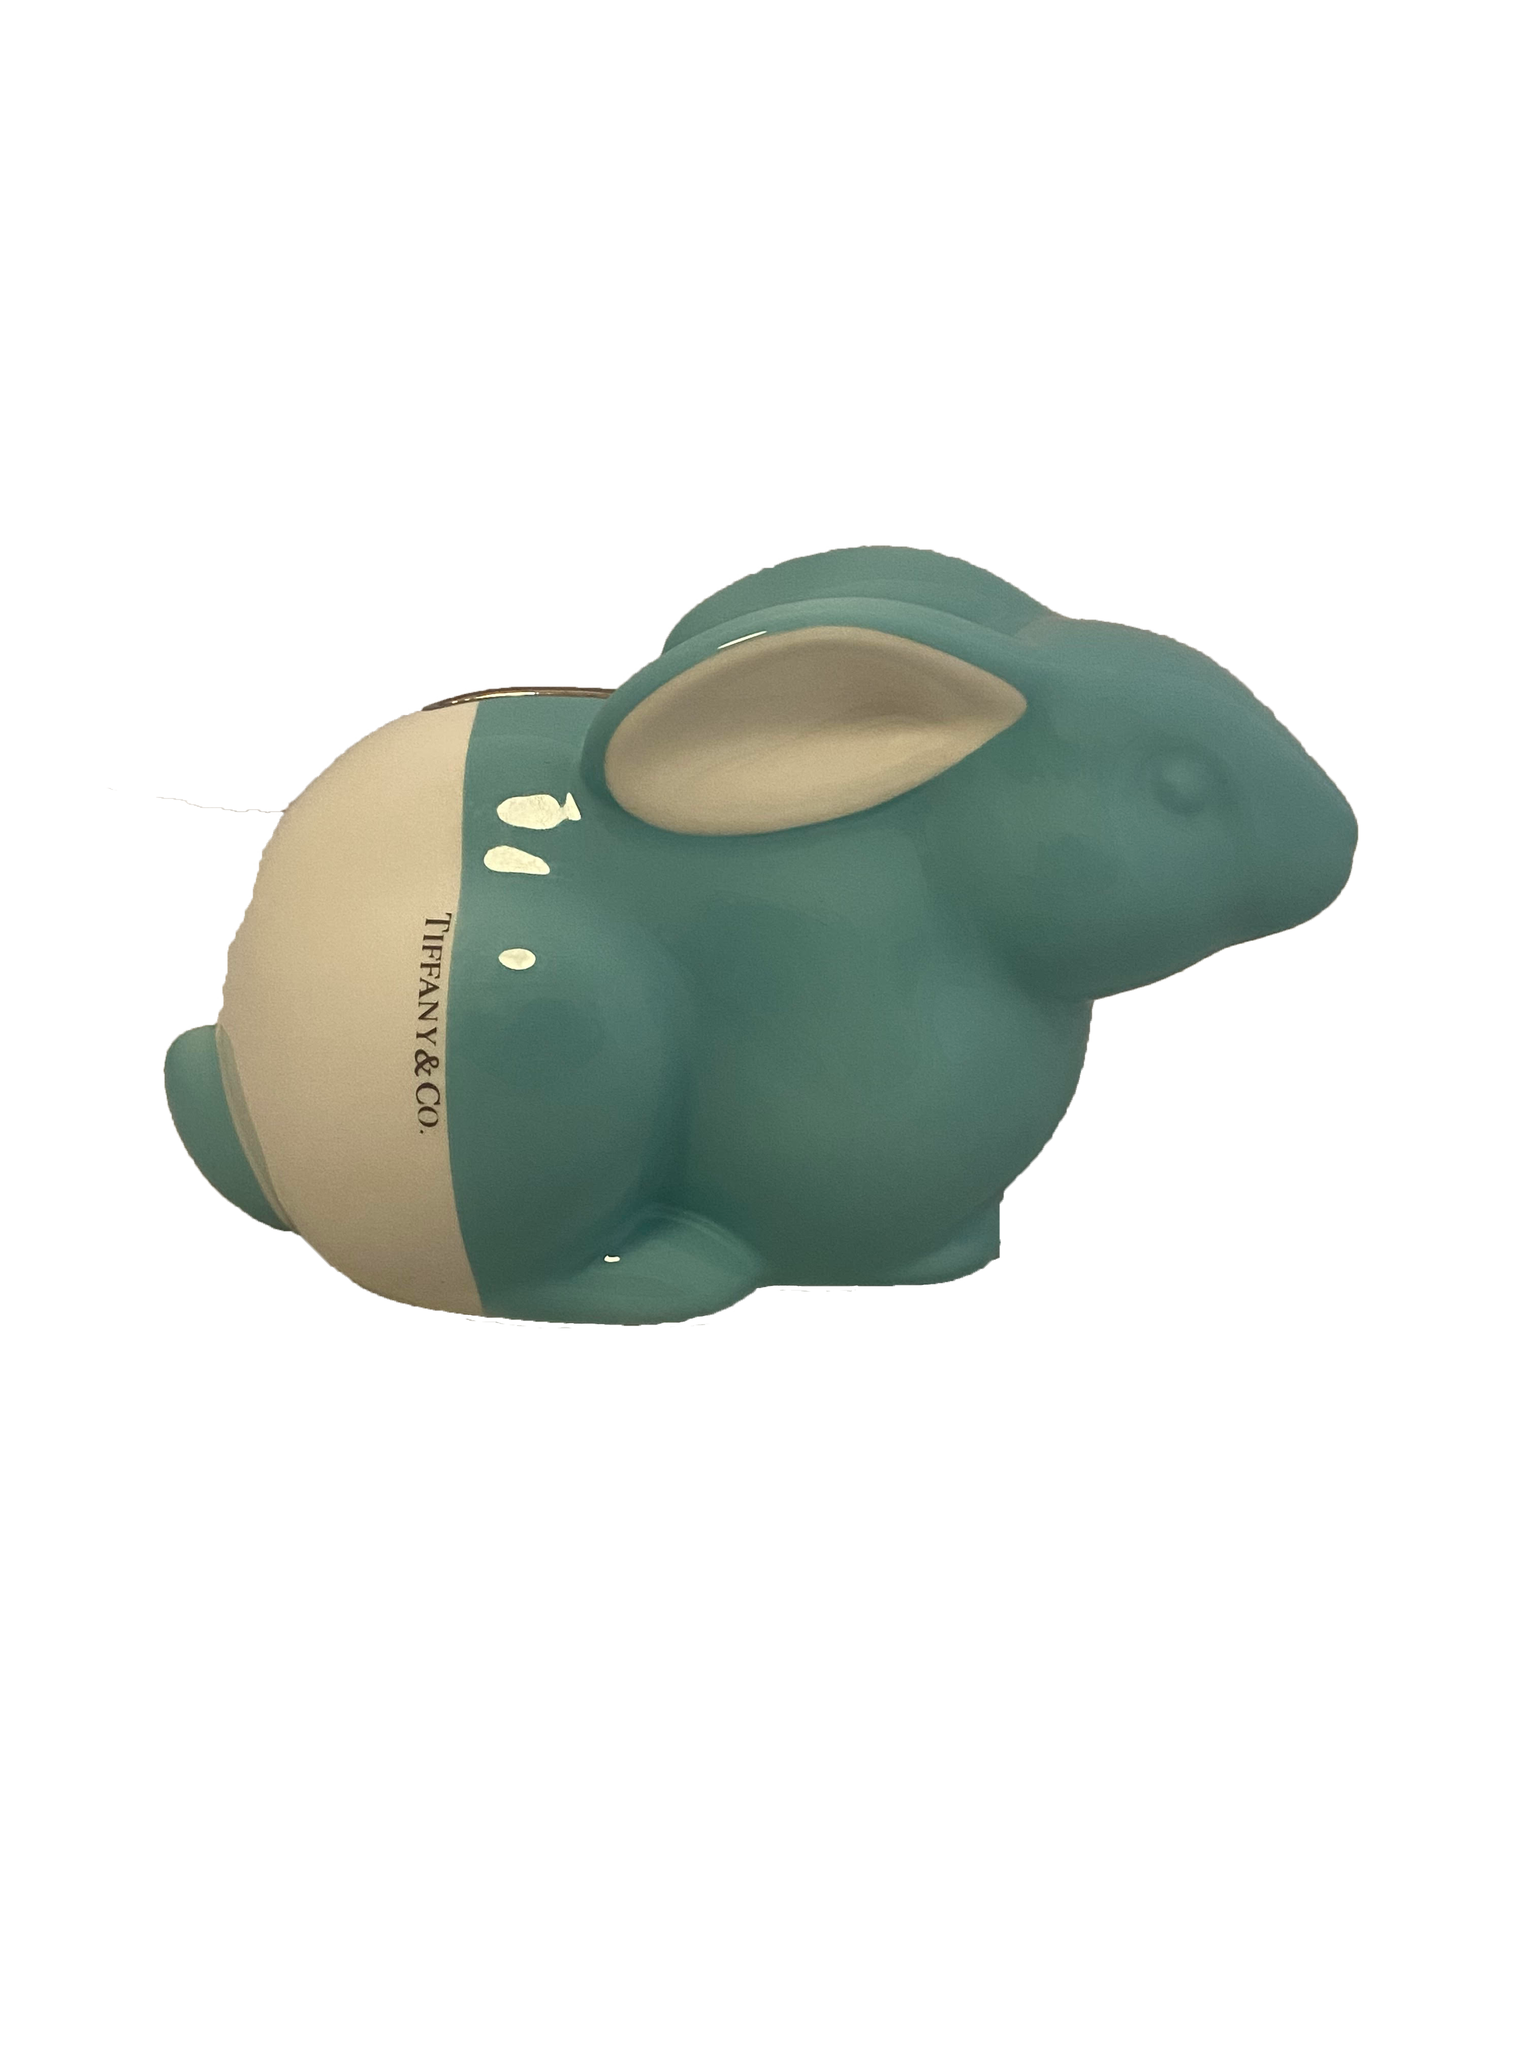 Ceramic Rabbit Bank